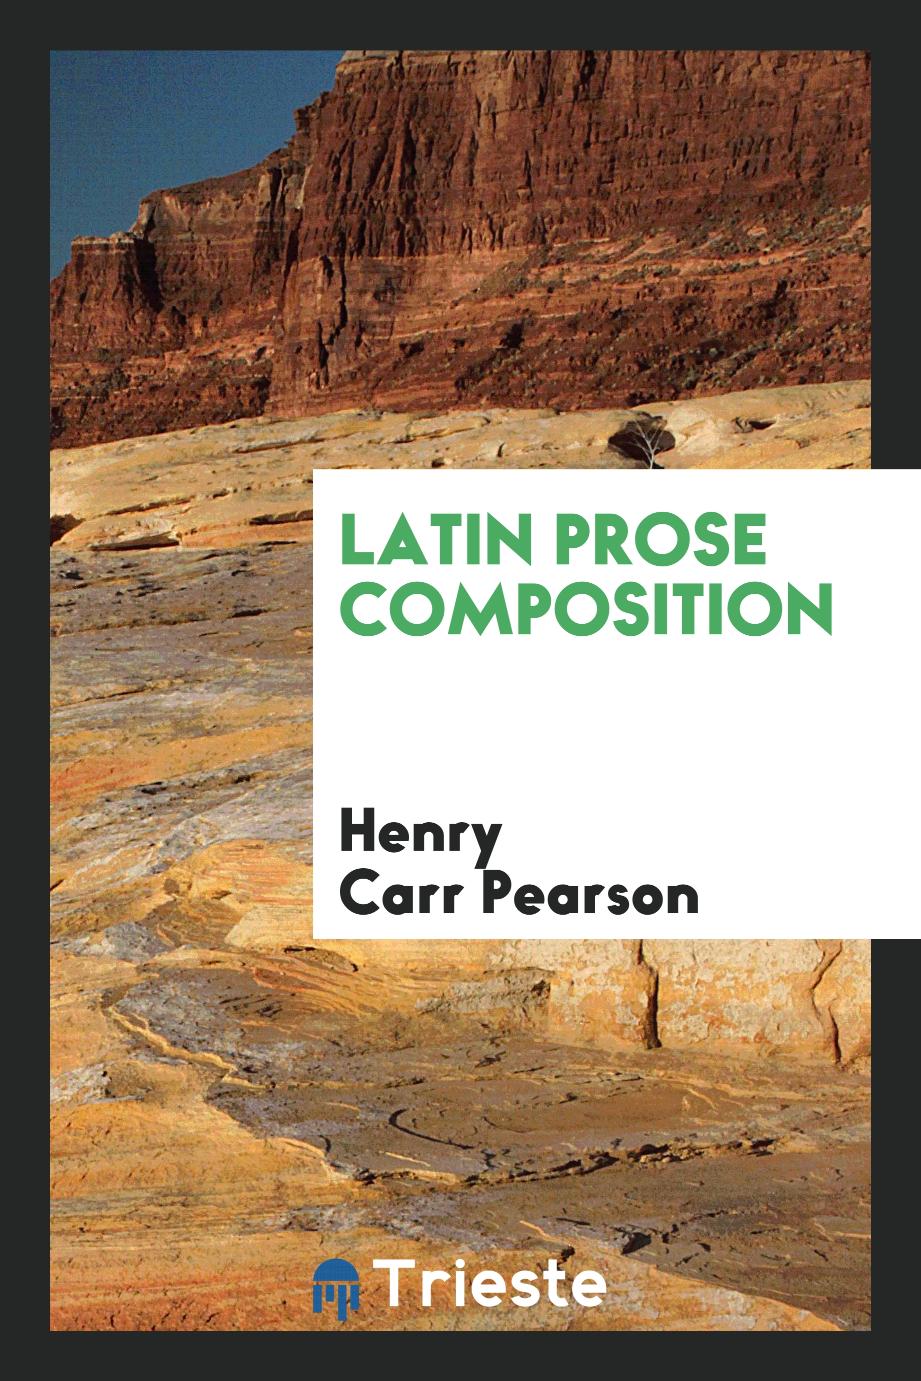 Latin prose composition